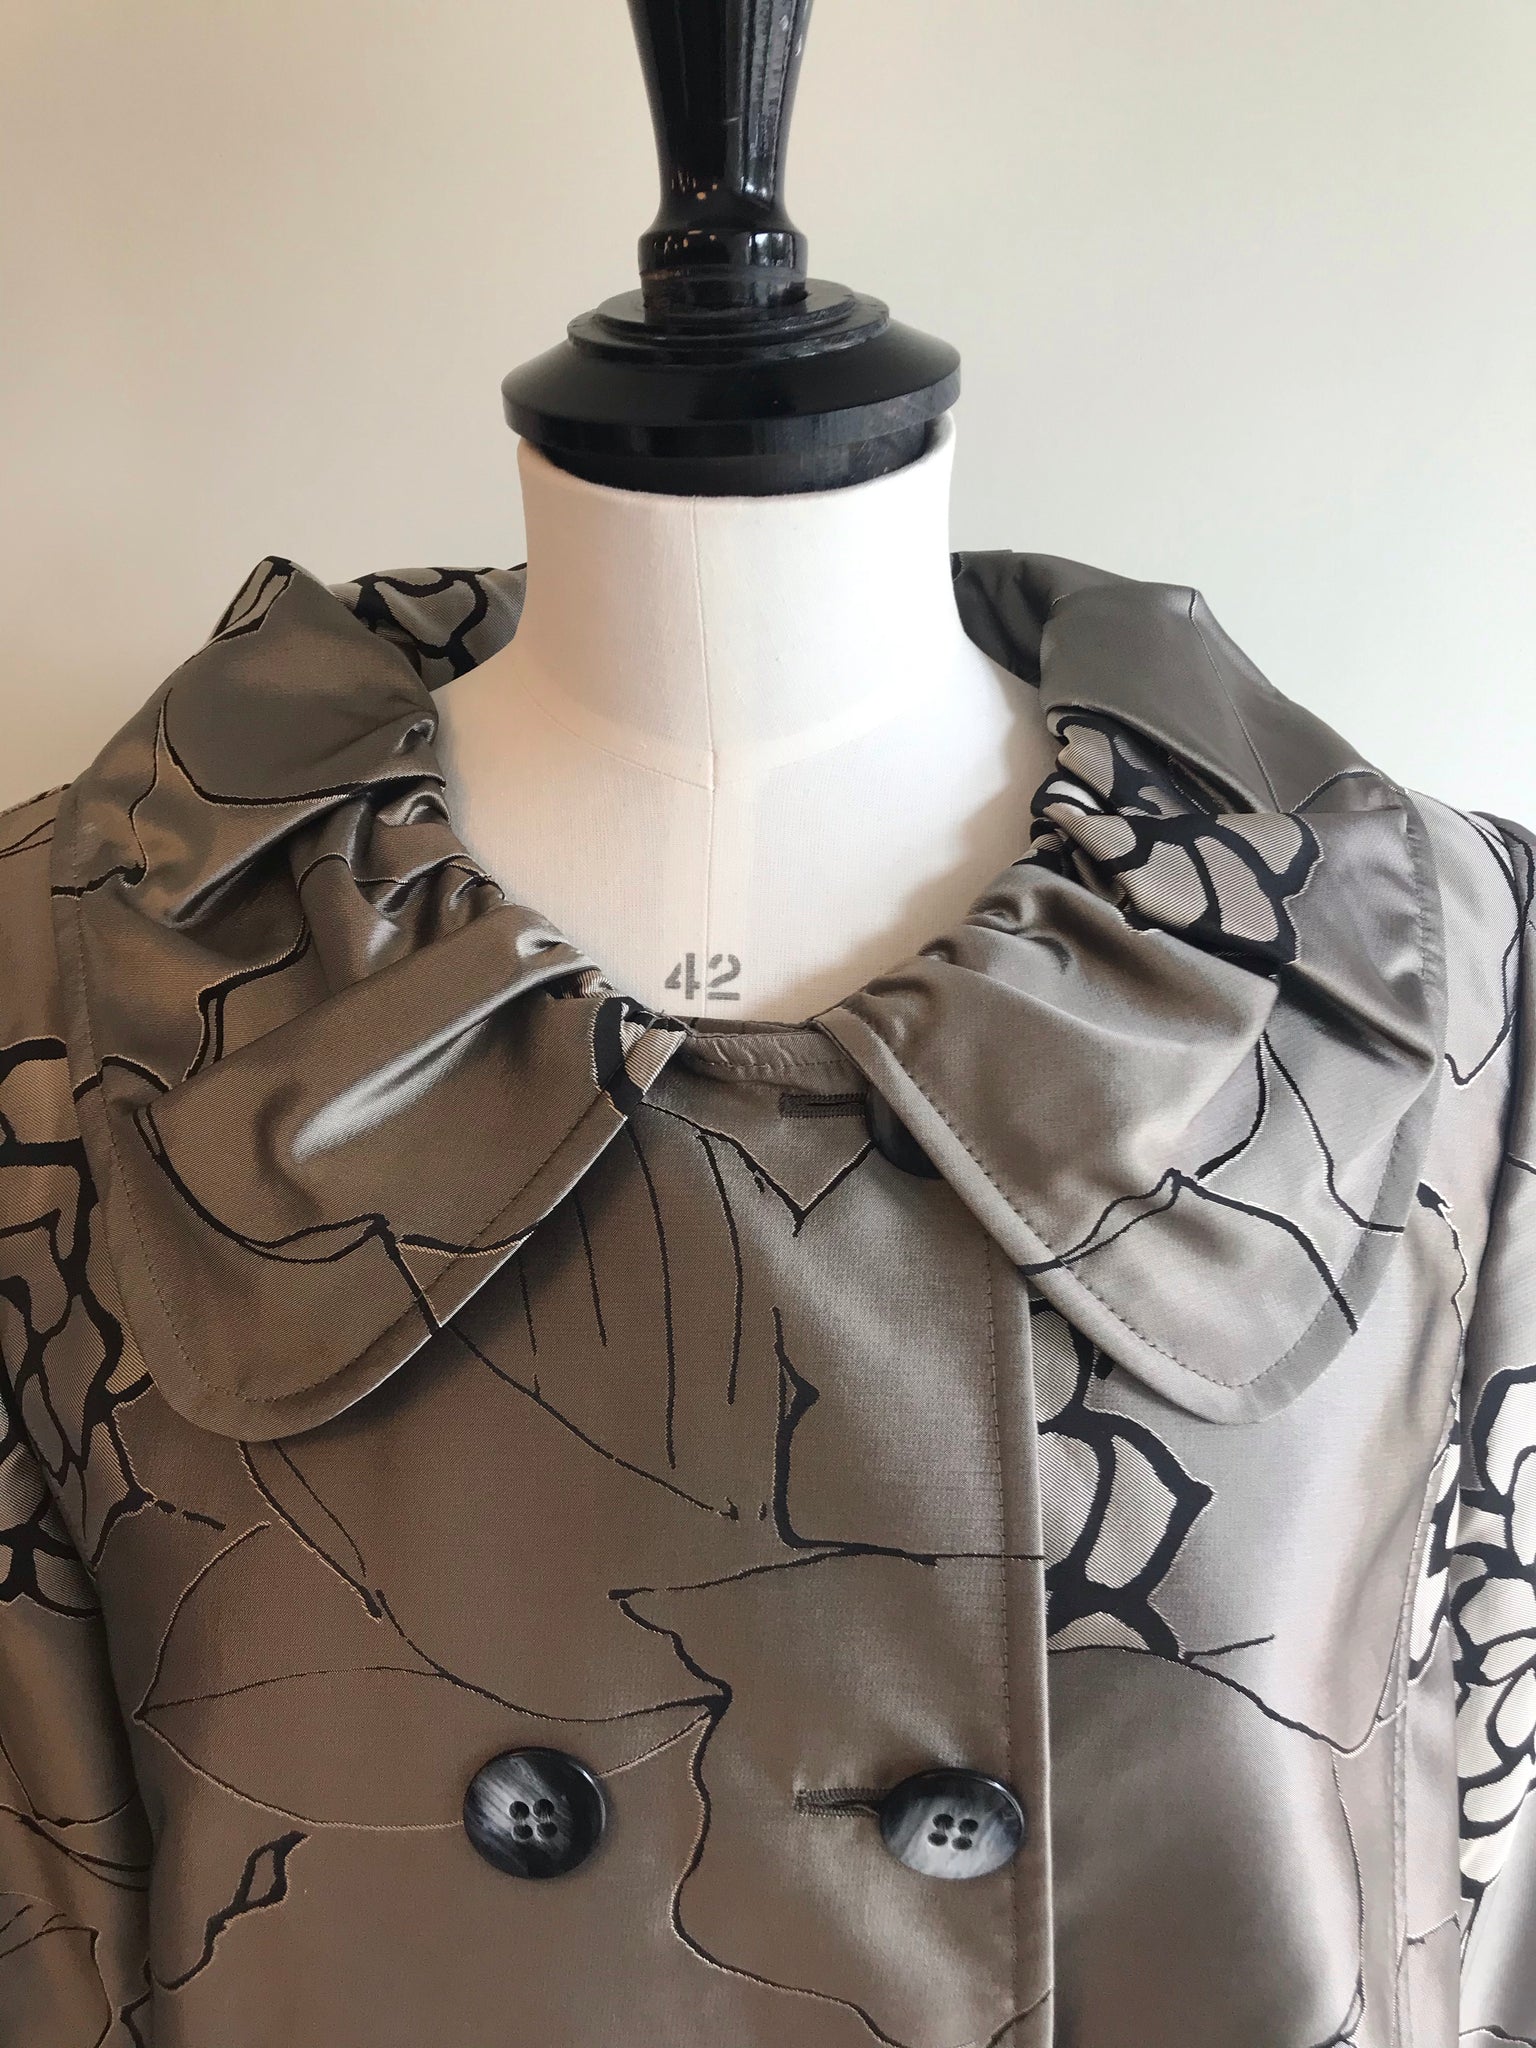 Isabella's Wardrobe Armani Collenzioni Evening Jacket.